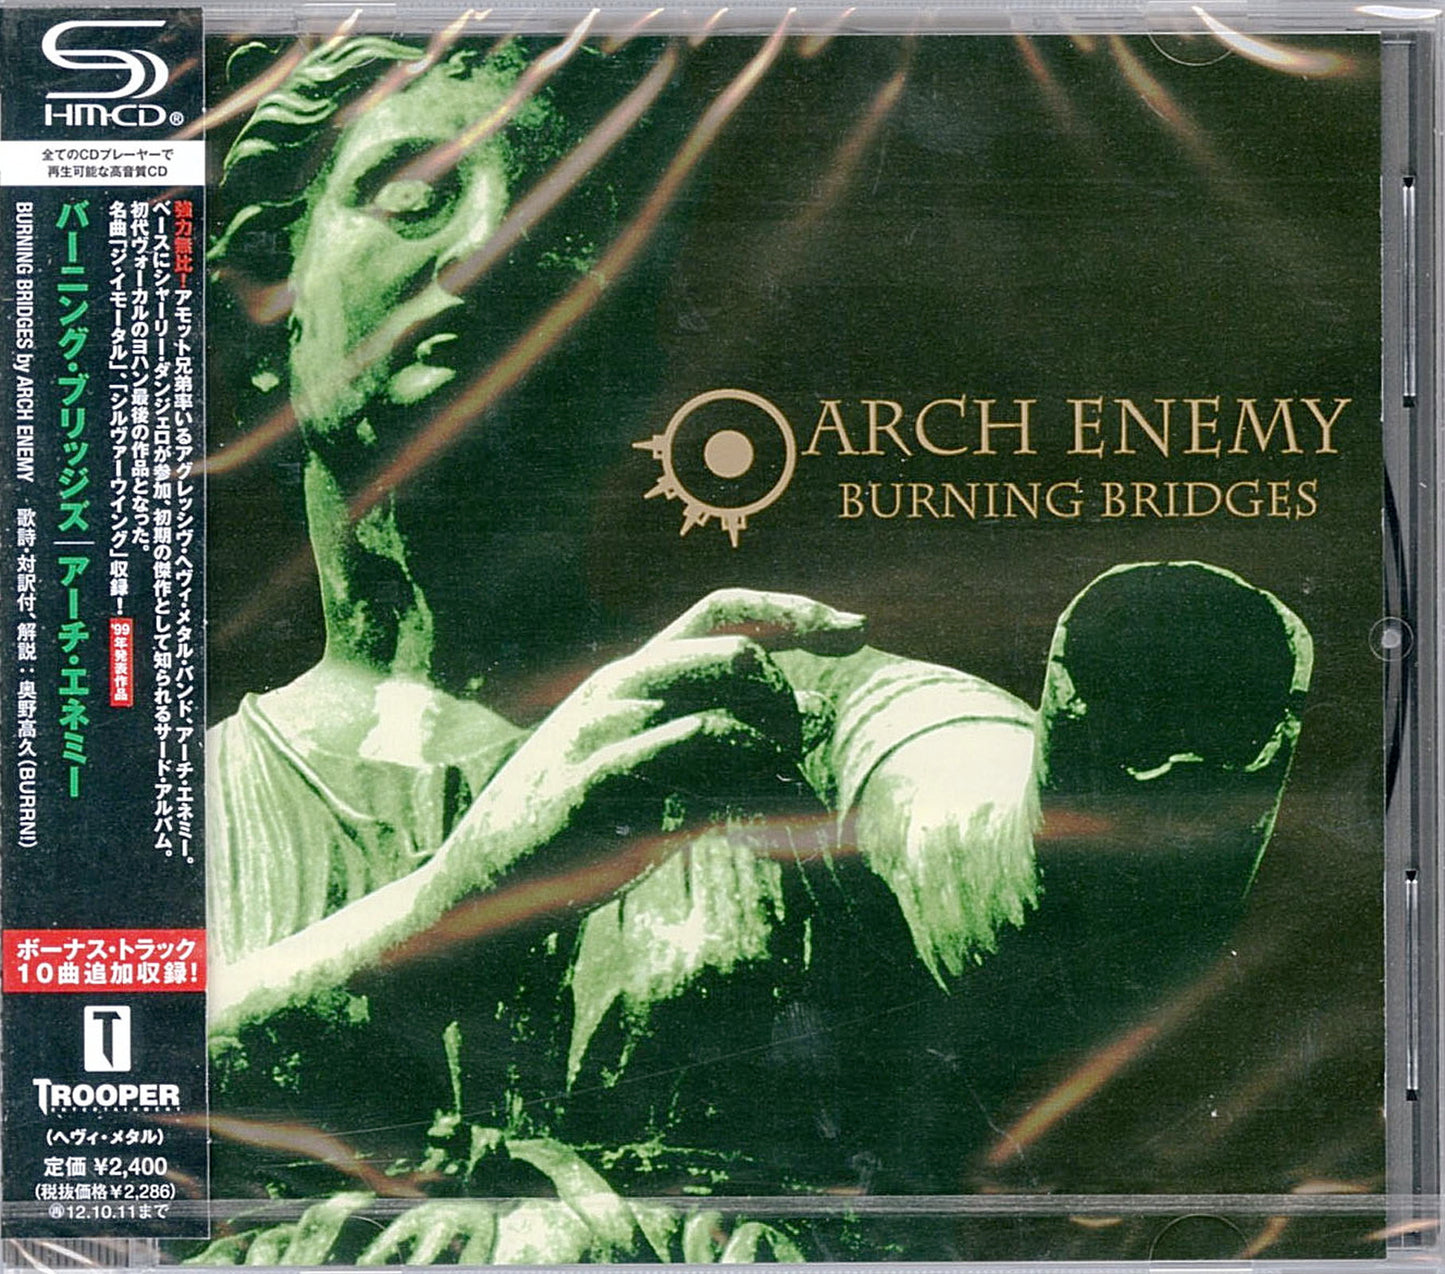 Arch Enemy - Burning Bridges - Japan  SHM-CD